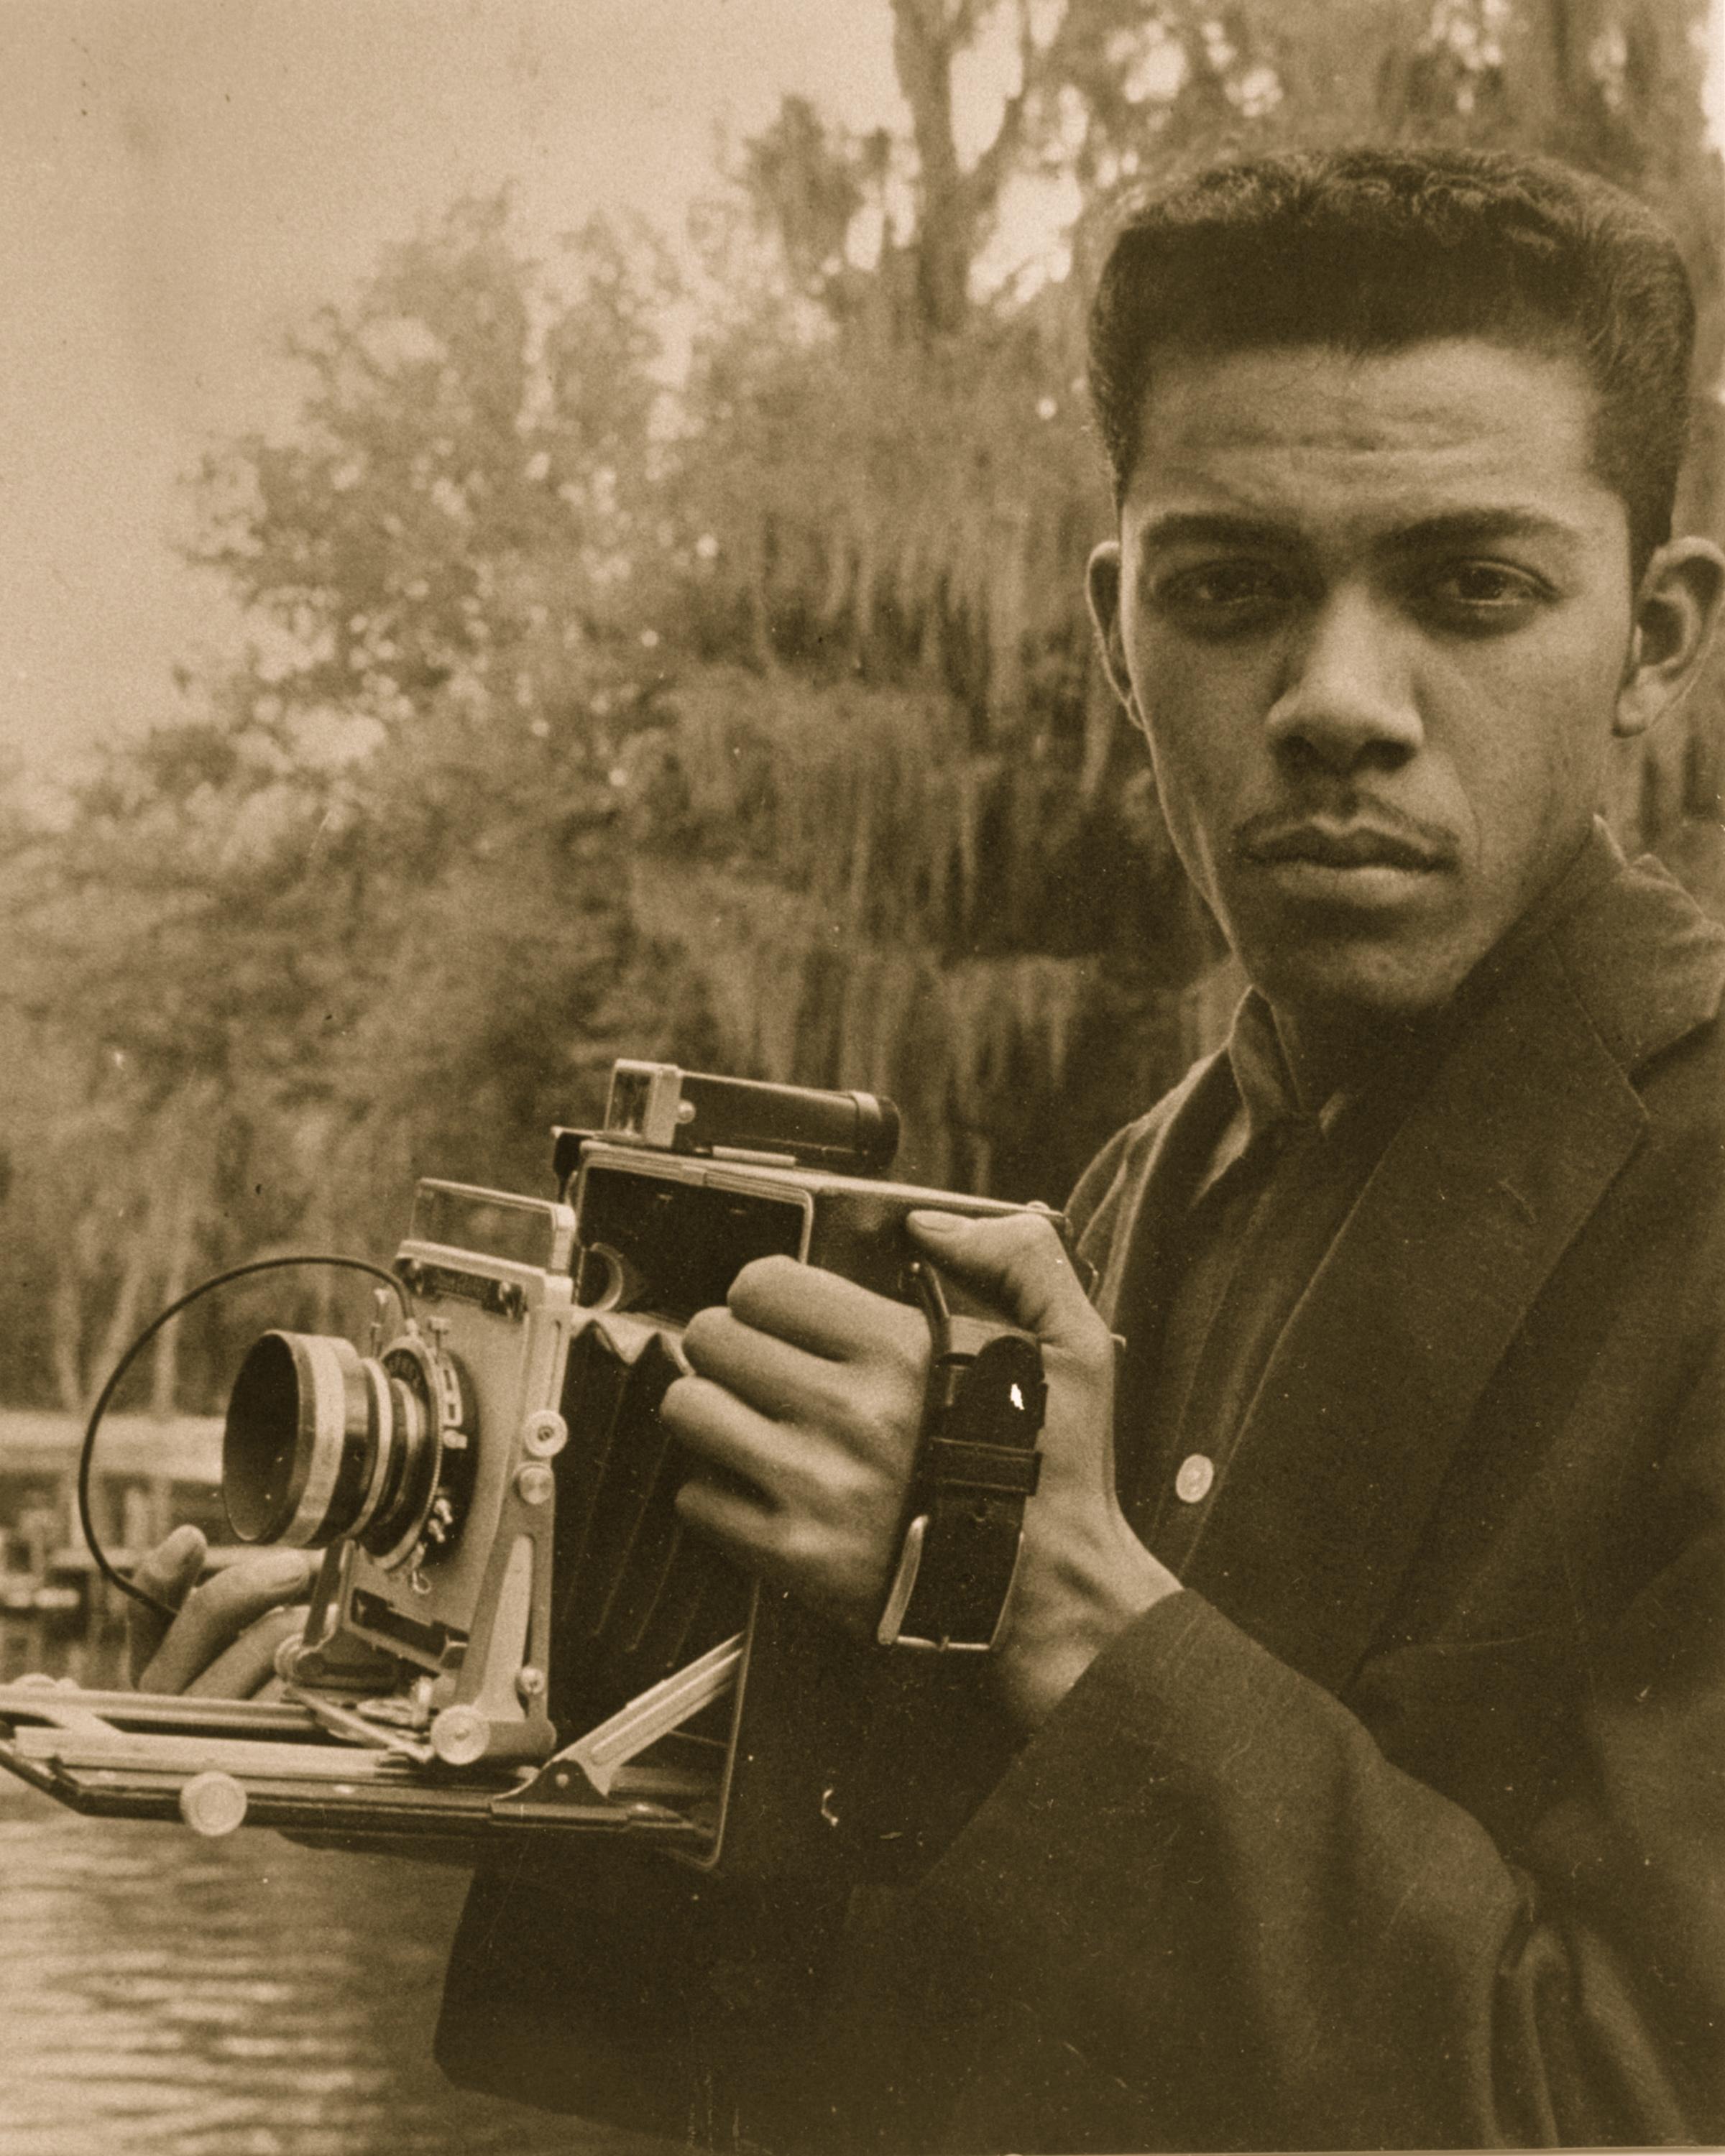 Cecil Williams holding a camera in a sepia-tone photograph